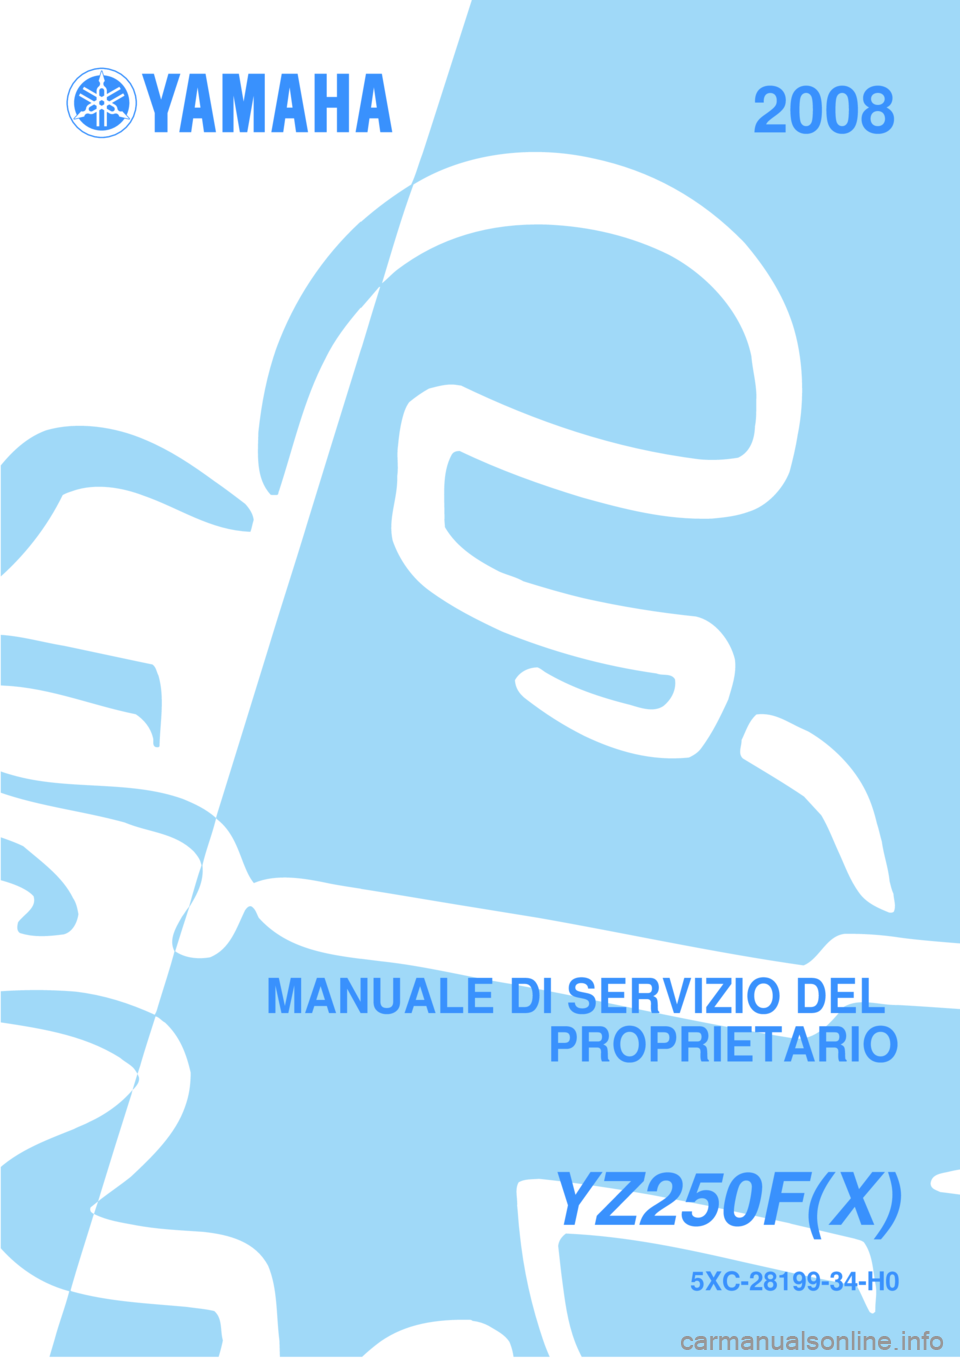 YAMAHA YZ250F 2008  Manuale duso (in Italian) MANUALE DI SERVIZIO DEL 
PROPRIETARIO
YZ250F(X)
5XC-28199-34-H0
2008 